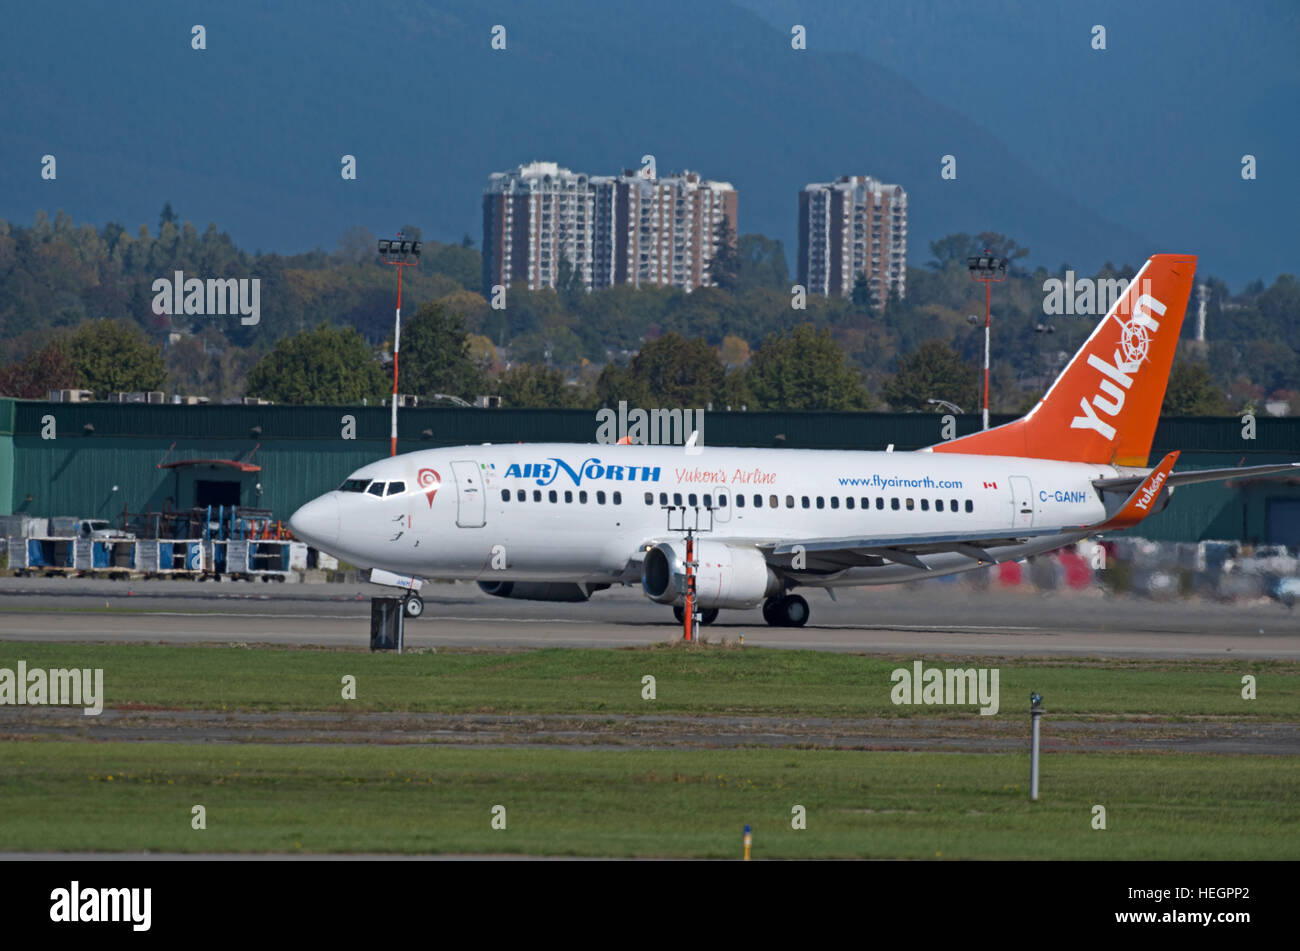 Air North Yukon territories flight at South Vancouver airport, BC.Canada.  SCO 11.286. Stock Photo